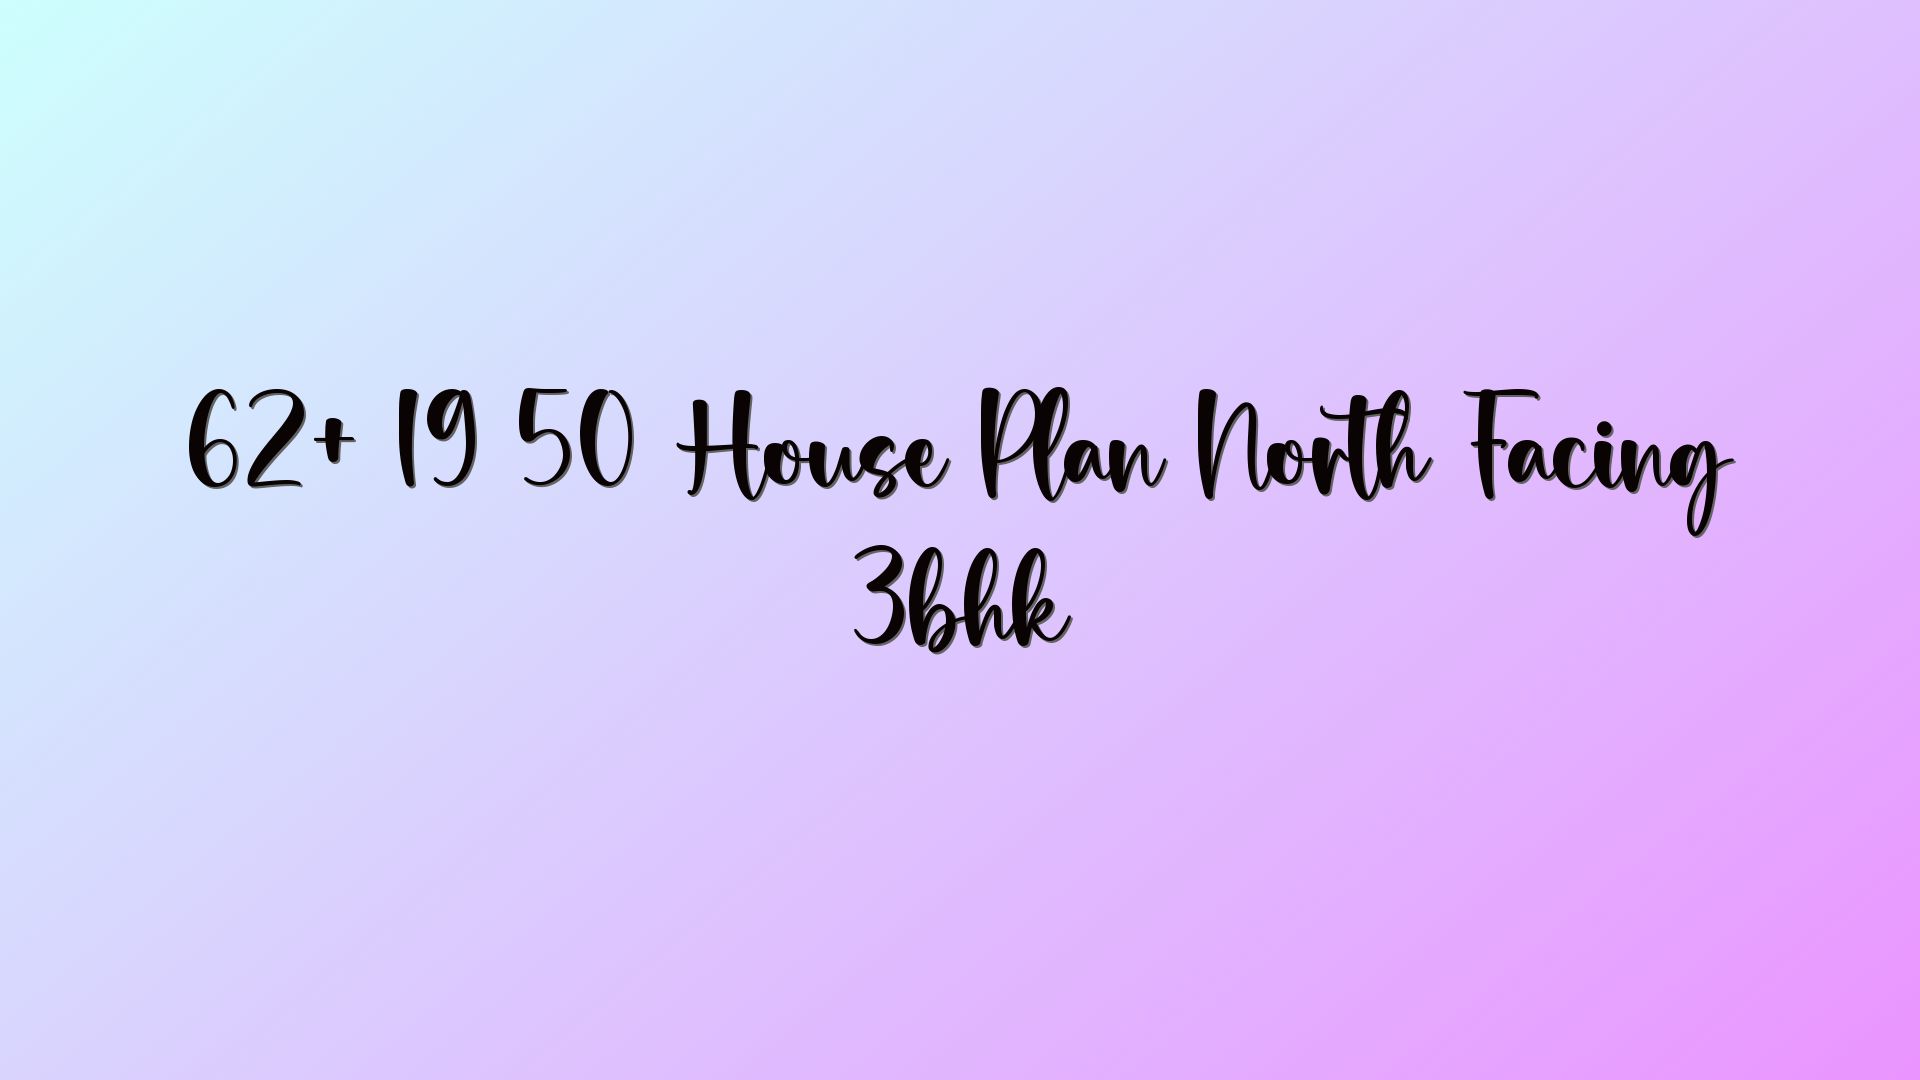 62+ 19 50 House Plan North Facing 3bhk